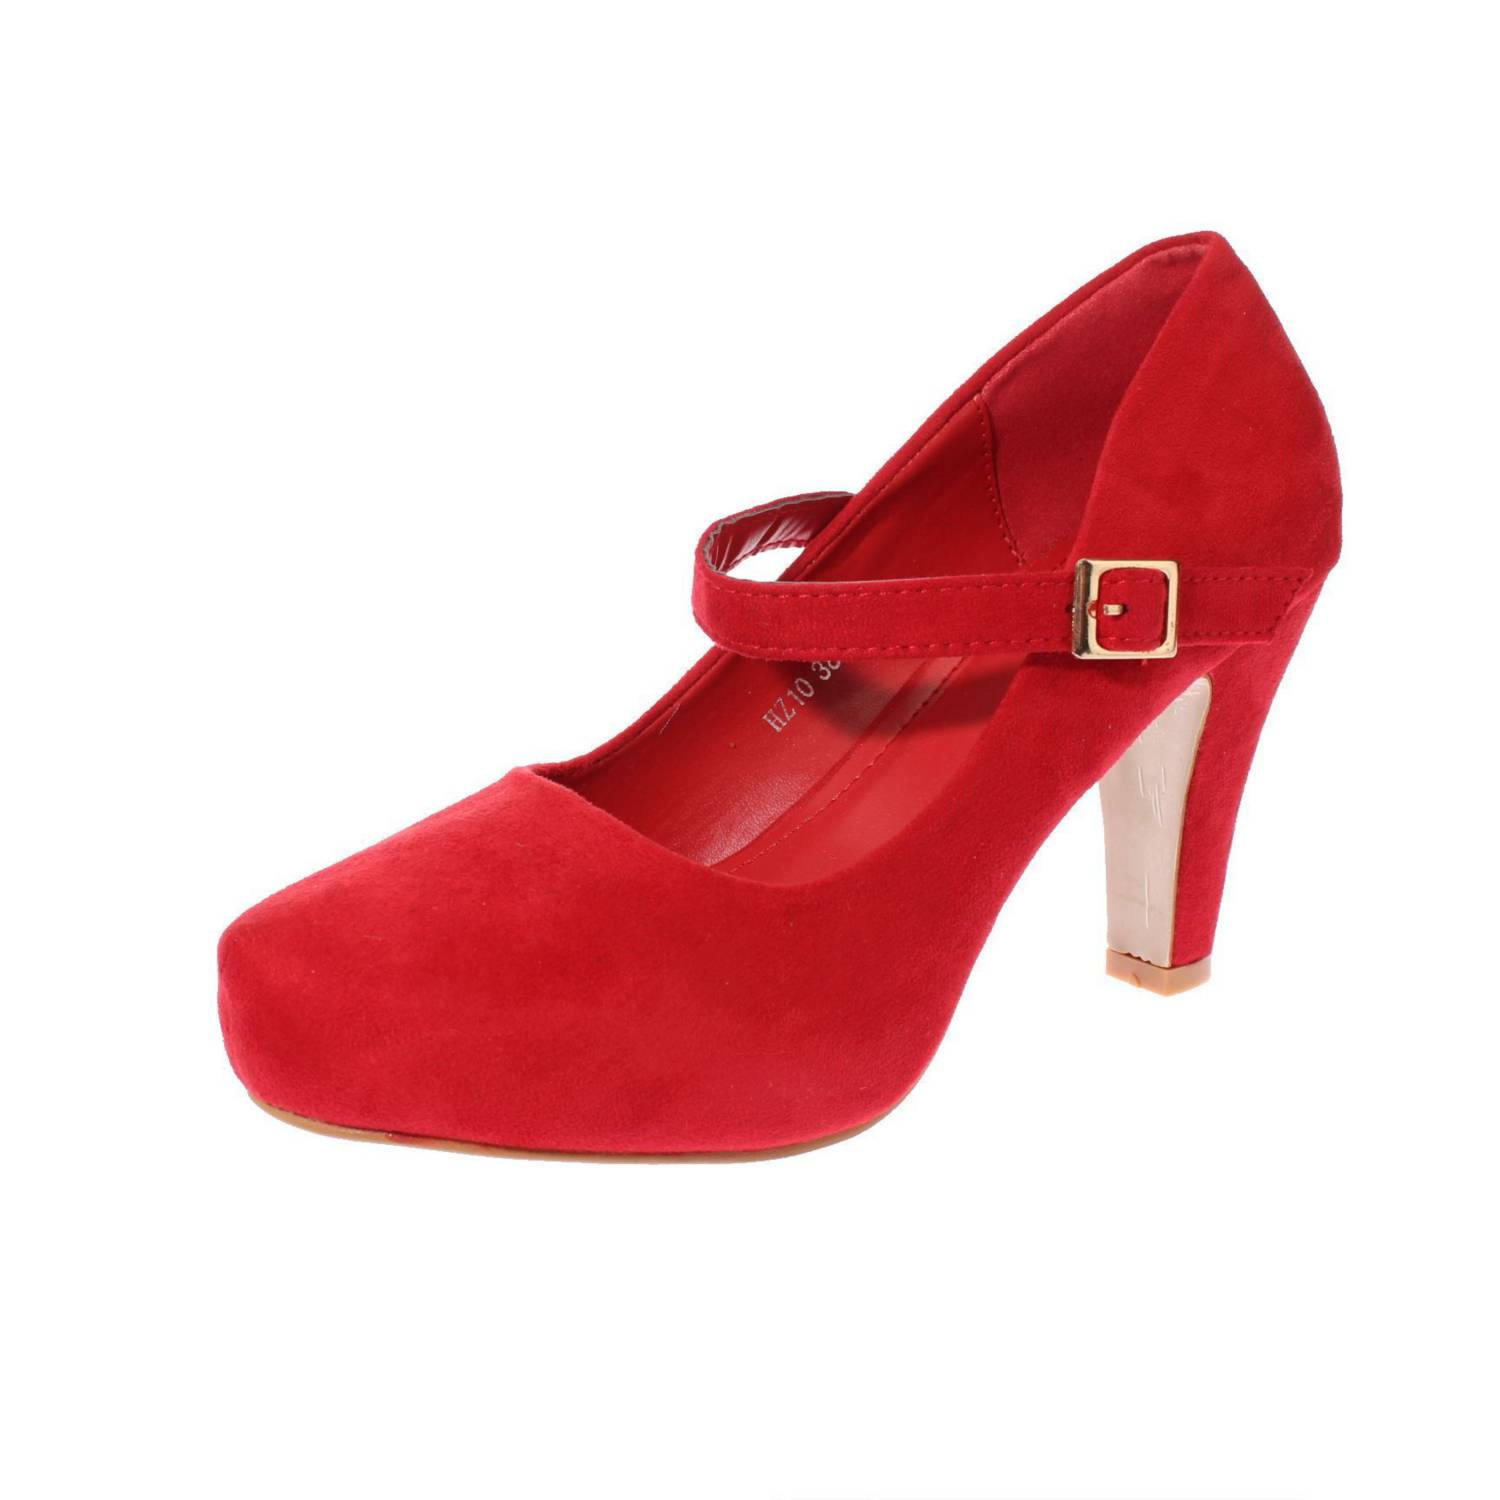 VIA FRANCA Zapato Taco Mujer Rojo | falabella.com